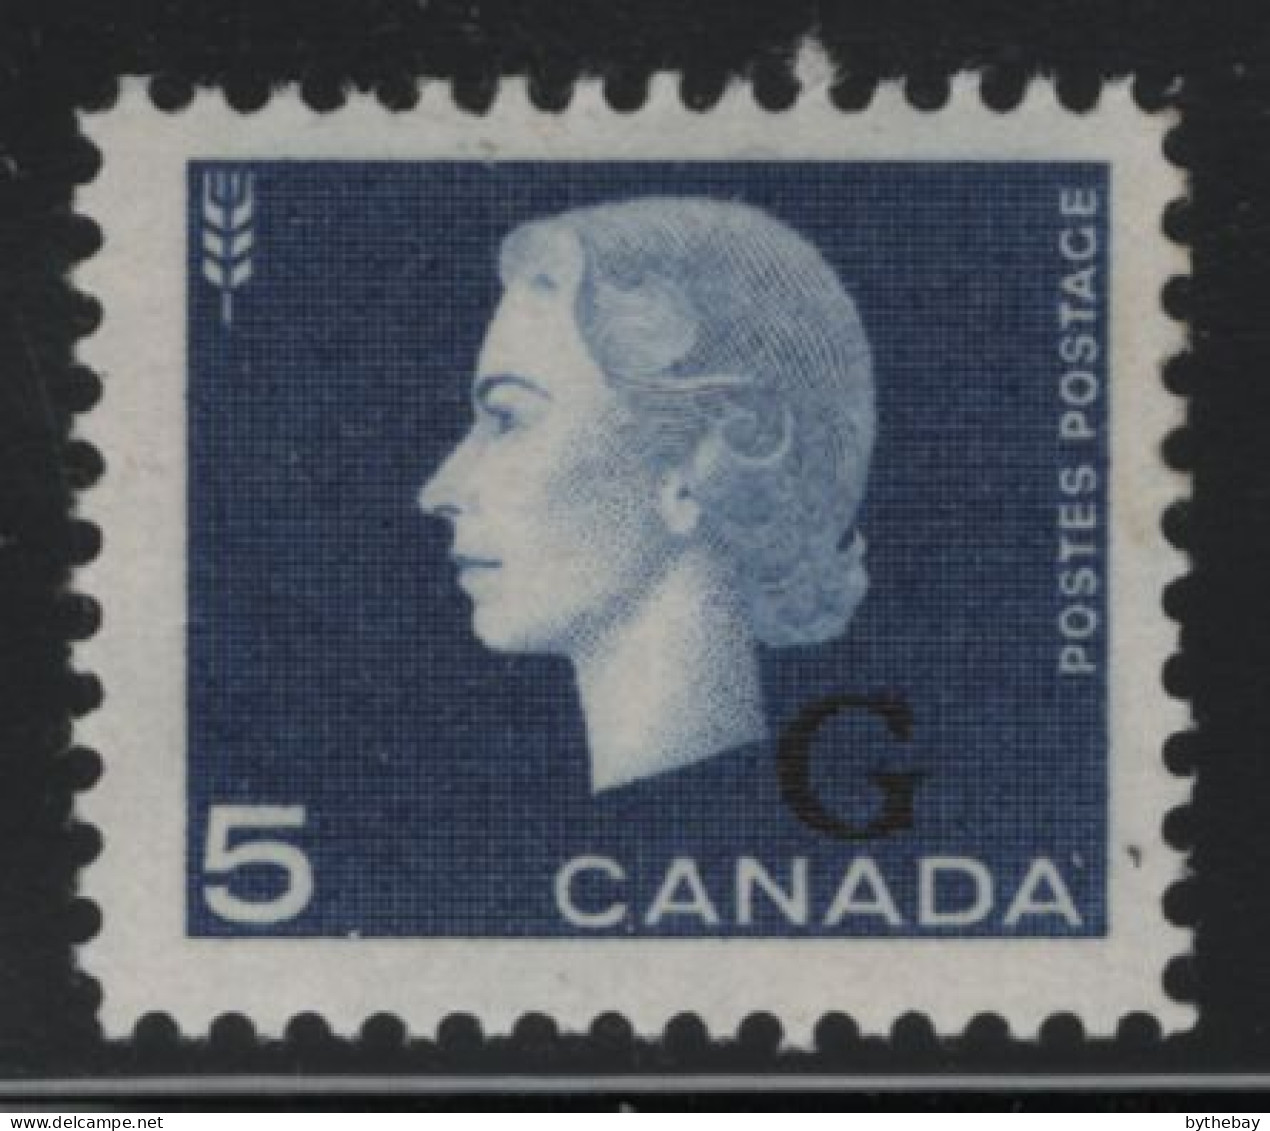 Canada 1963 MNH Sc O49 5c QEII Cameo G Overprint, Glazed Gum - Aufdrucksausgaben